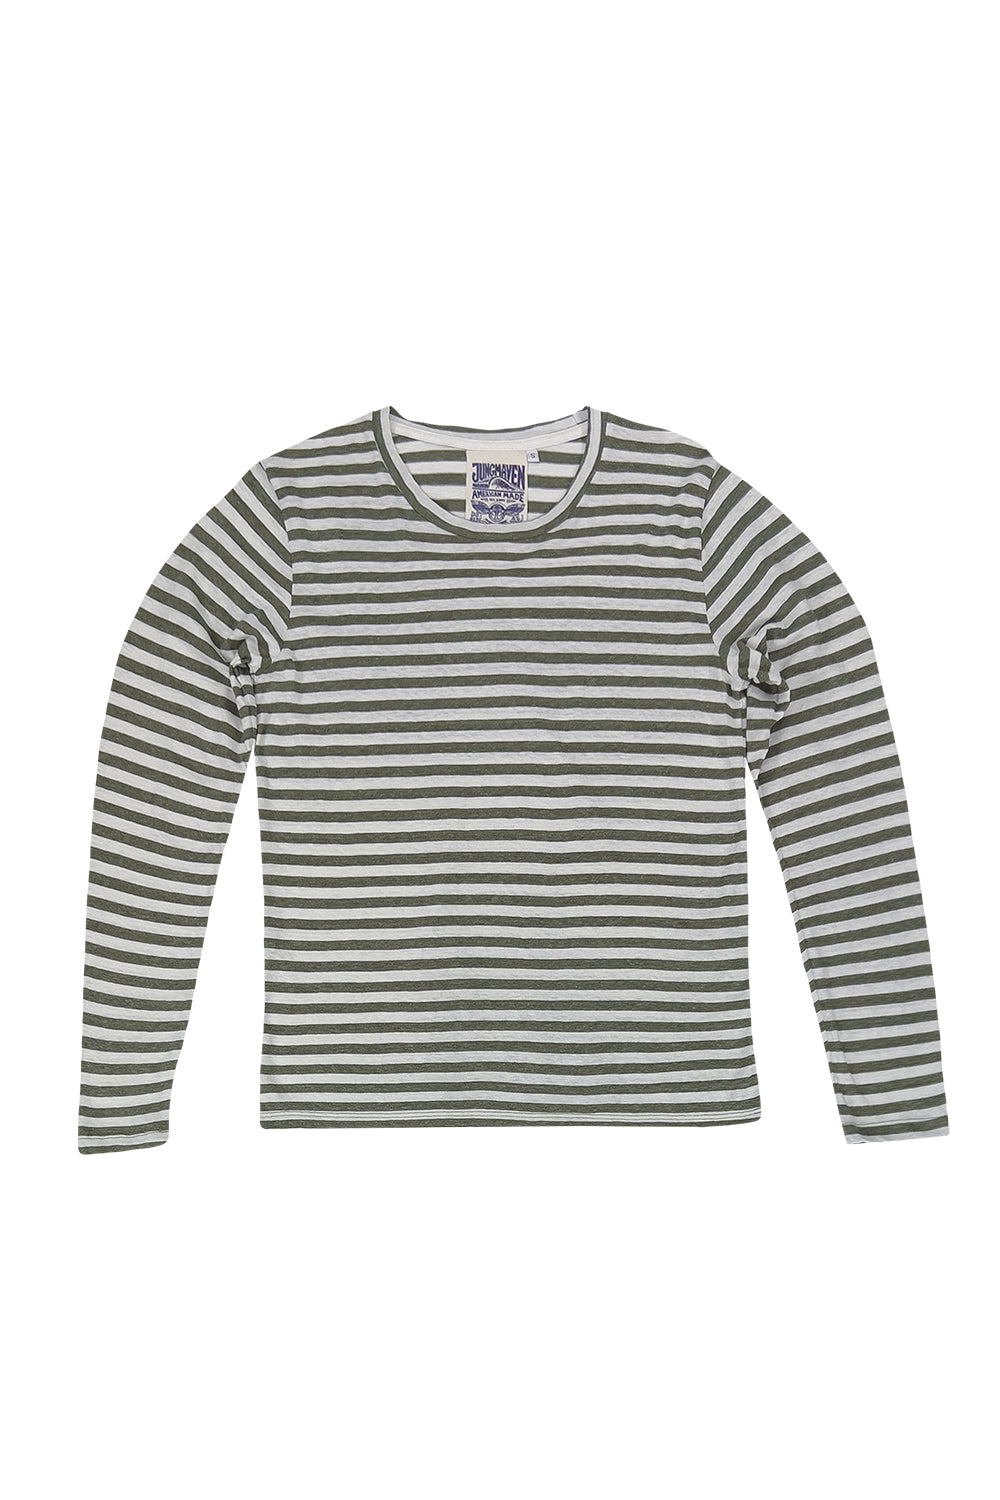 Stripe Encanto Long Sleeve Tee | Jungmaven Hemp Clothing & Accessories / Color:  Olive/White Stripe